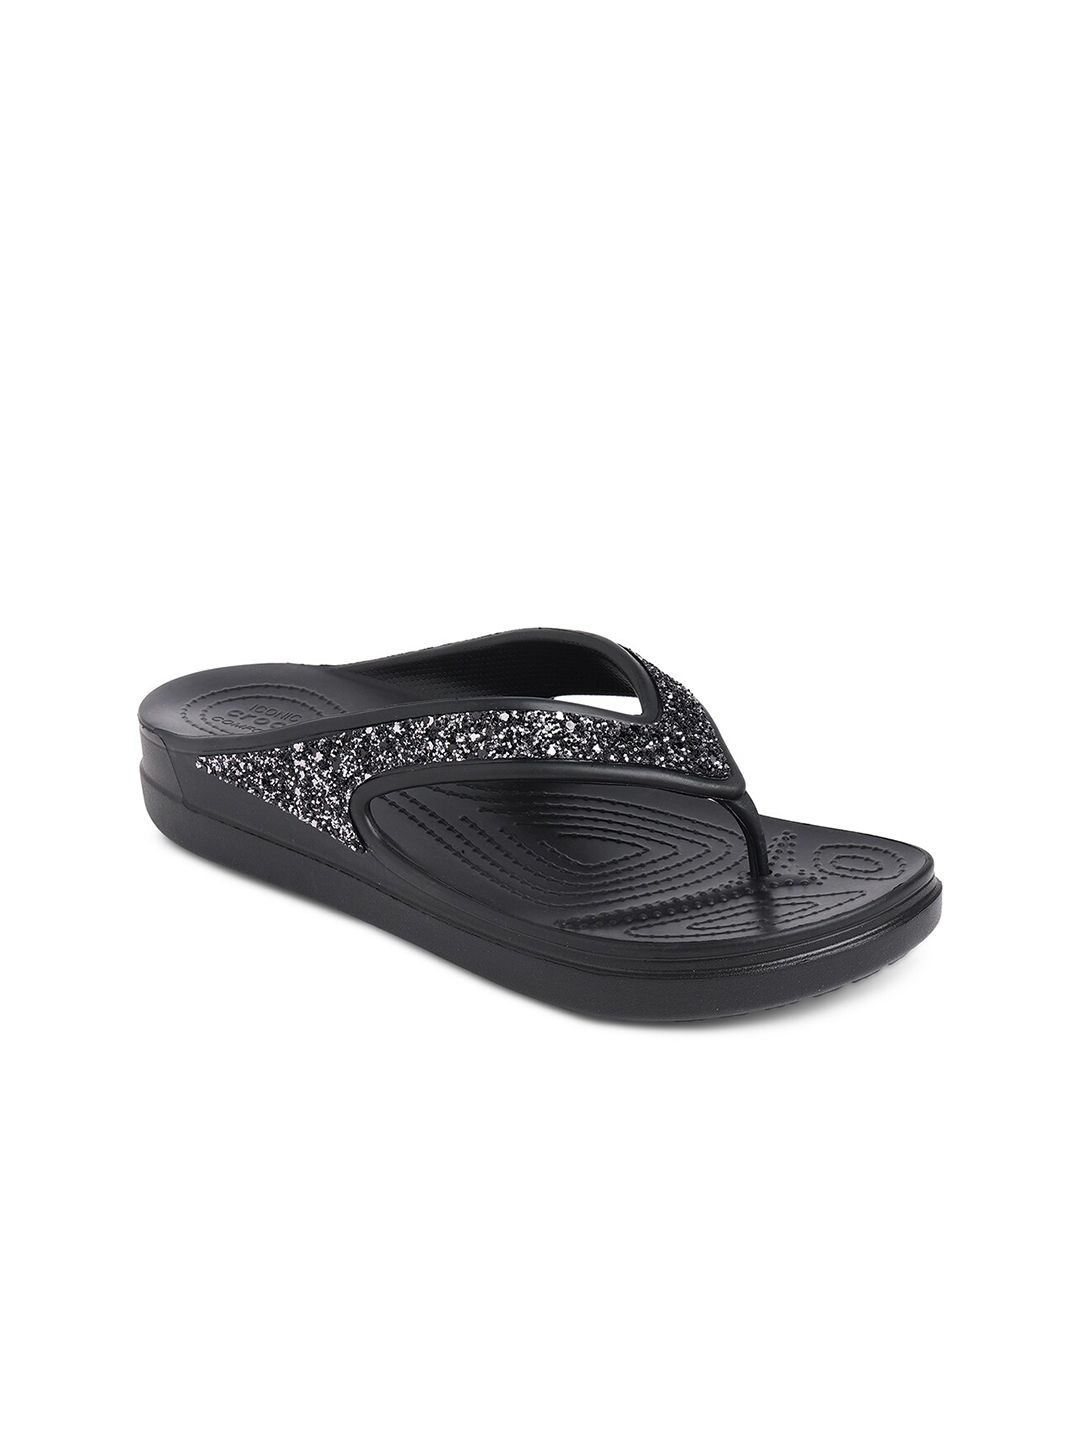 Crocs Women Black Embellished Croslite Thong Flip-Flops Price in India